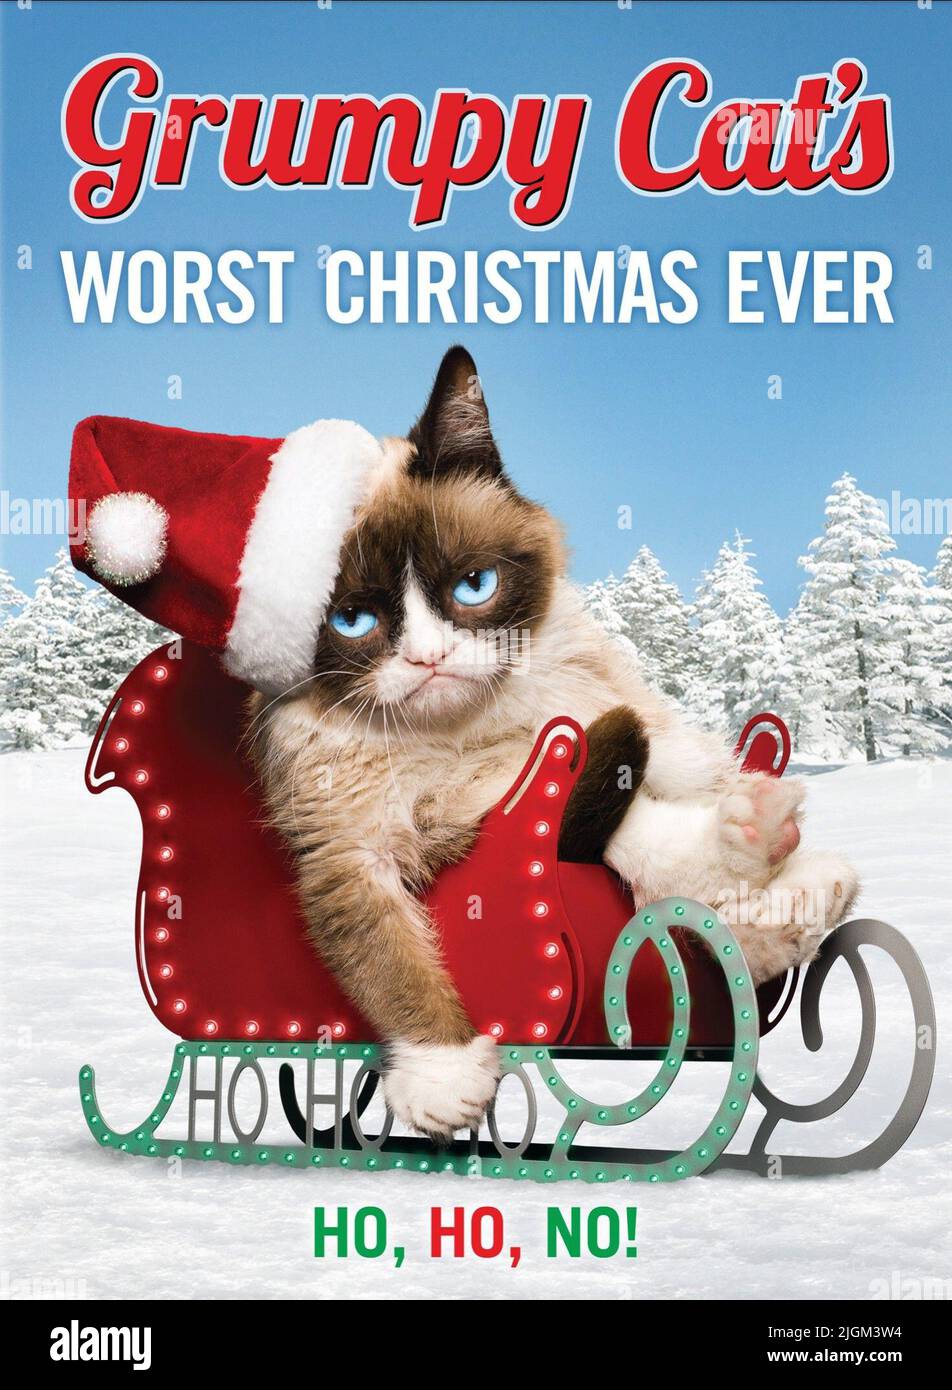 GRUMPY CAT POSTER, GRUMPY CAT'S WORST CHRISTMAS EVER, 2014 Stock Photo